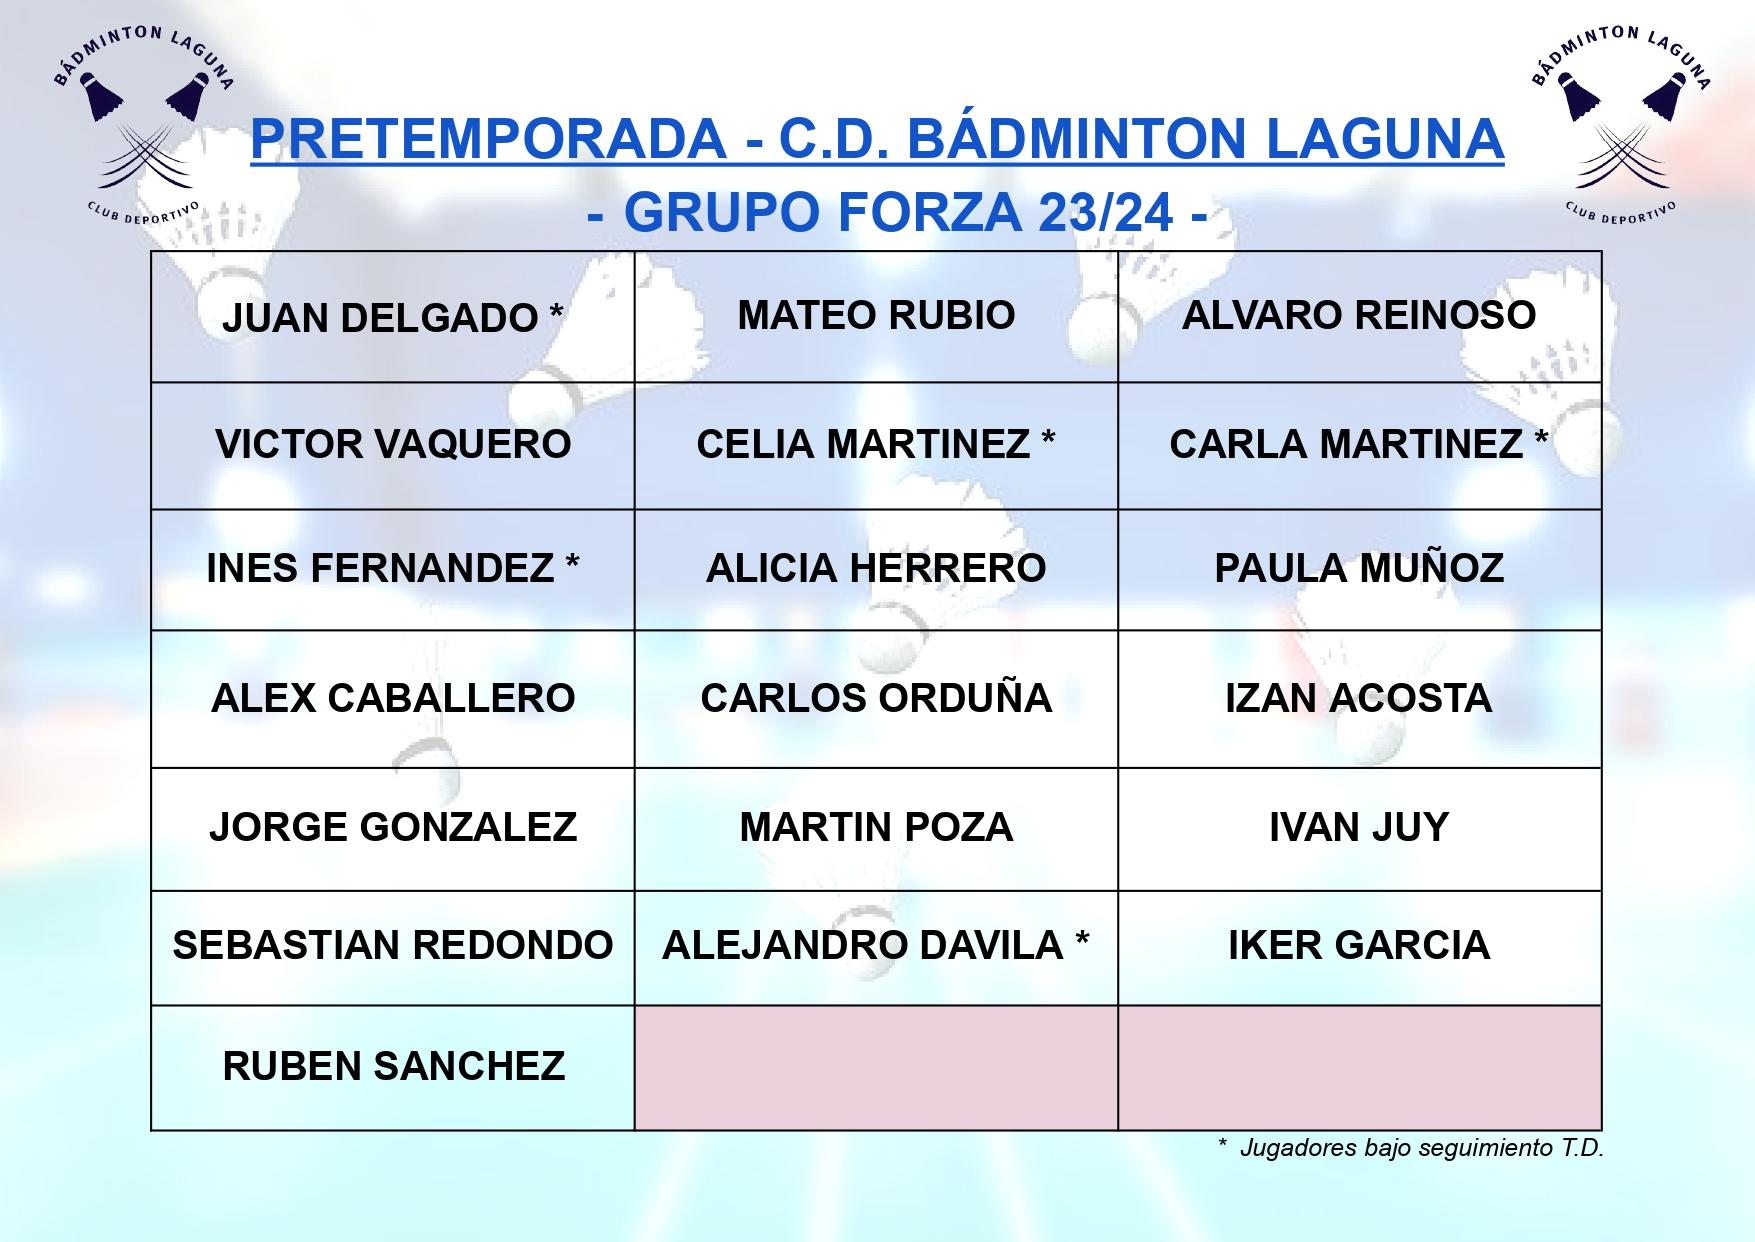 Pretemporada grupo forza c d badminton laguna pages to jpg 0001